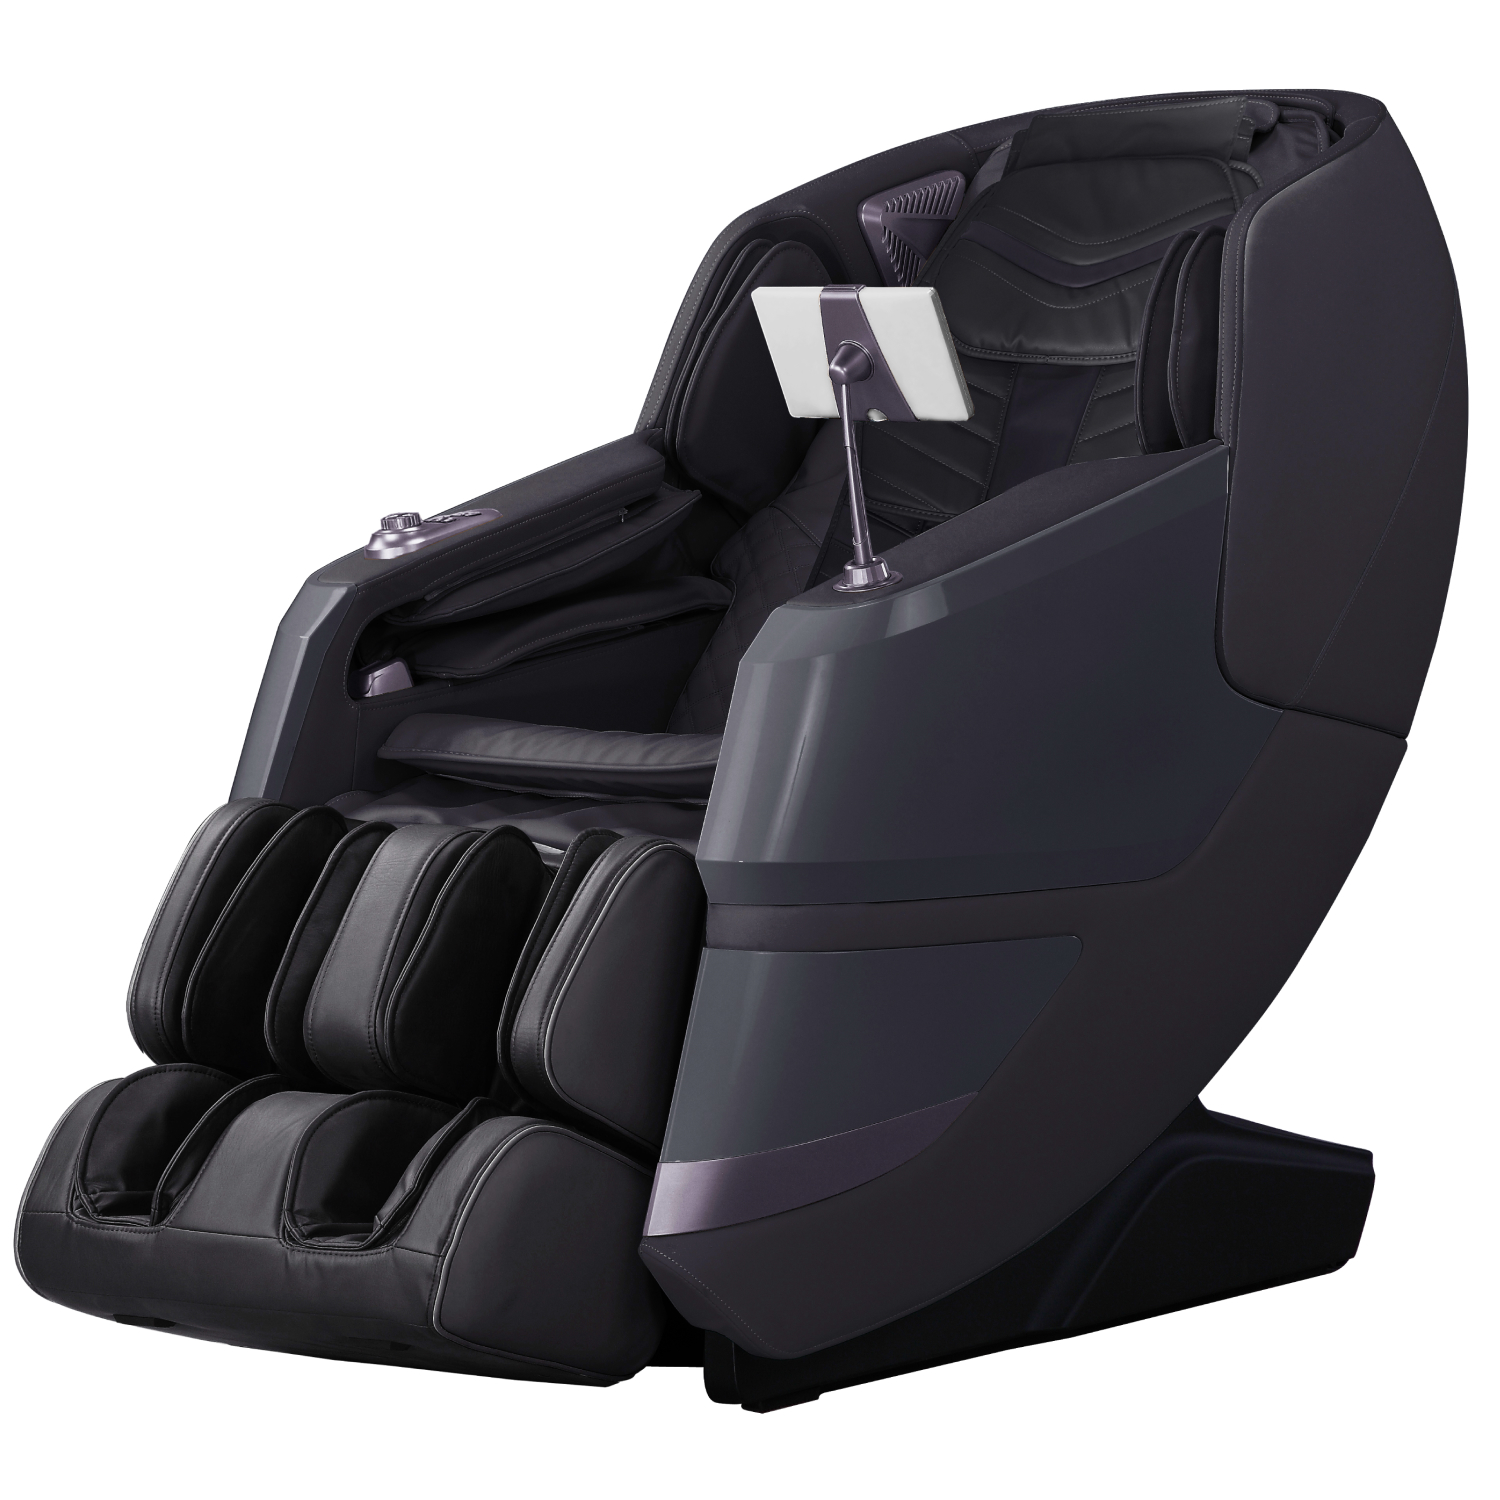 FOCUS III Massage Chair BLACK